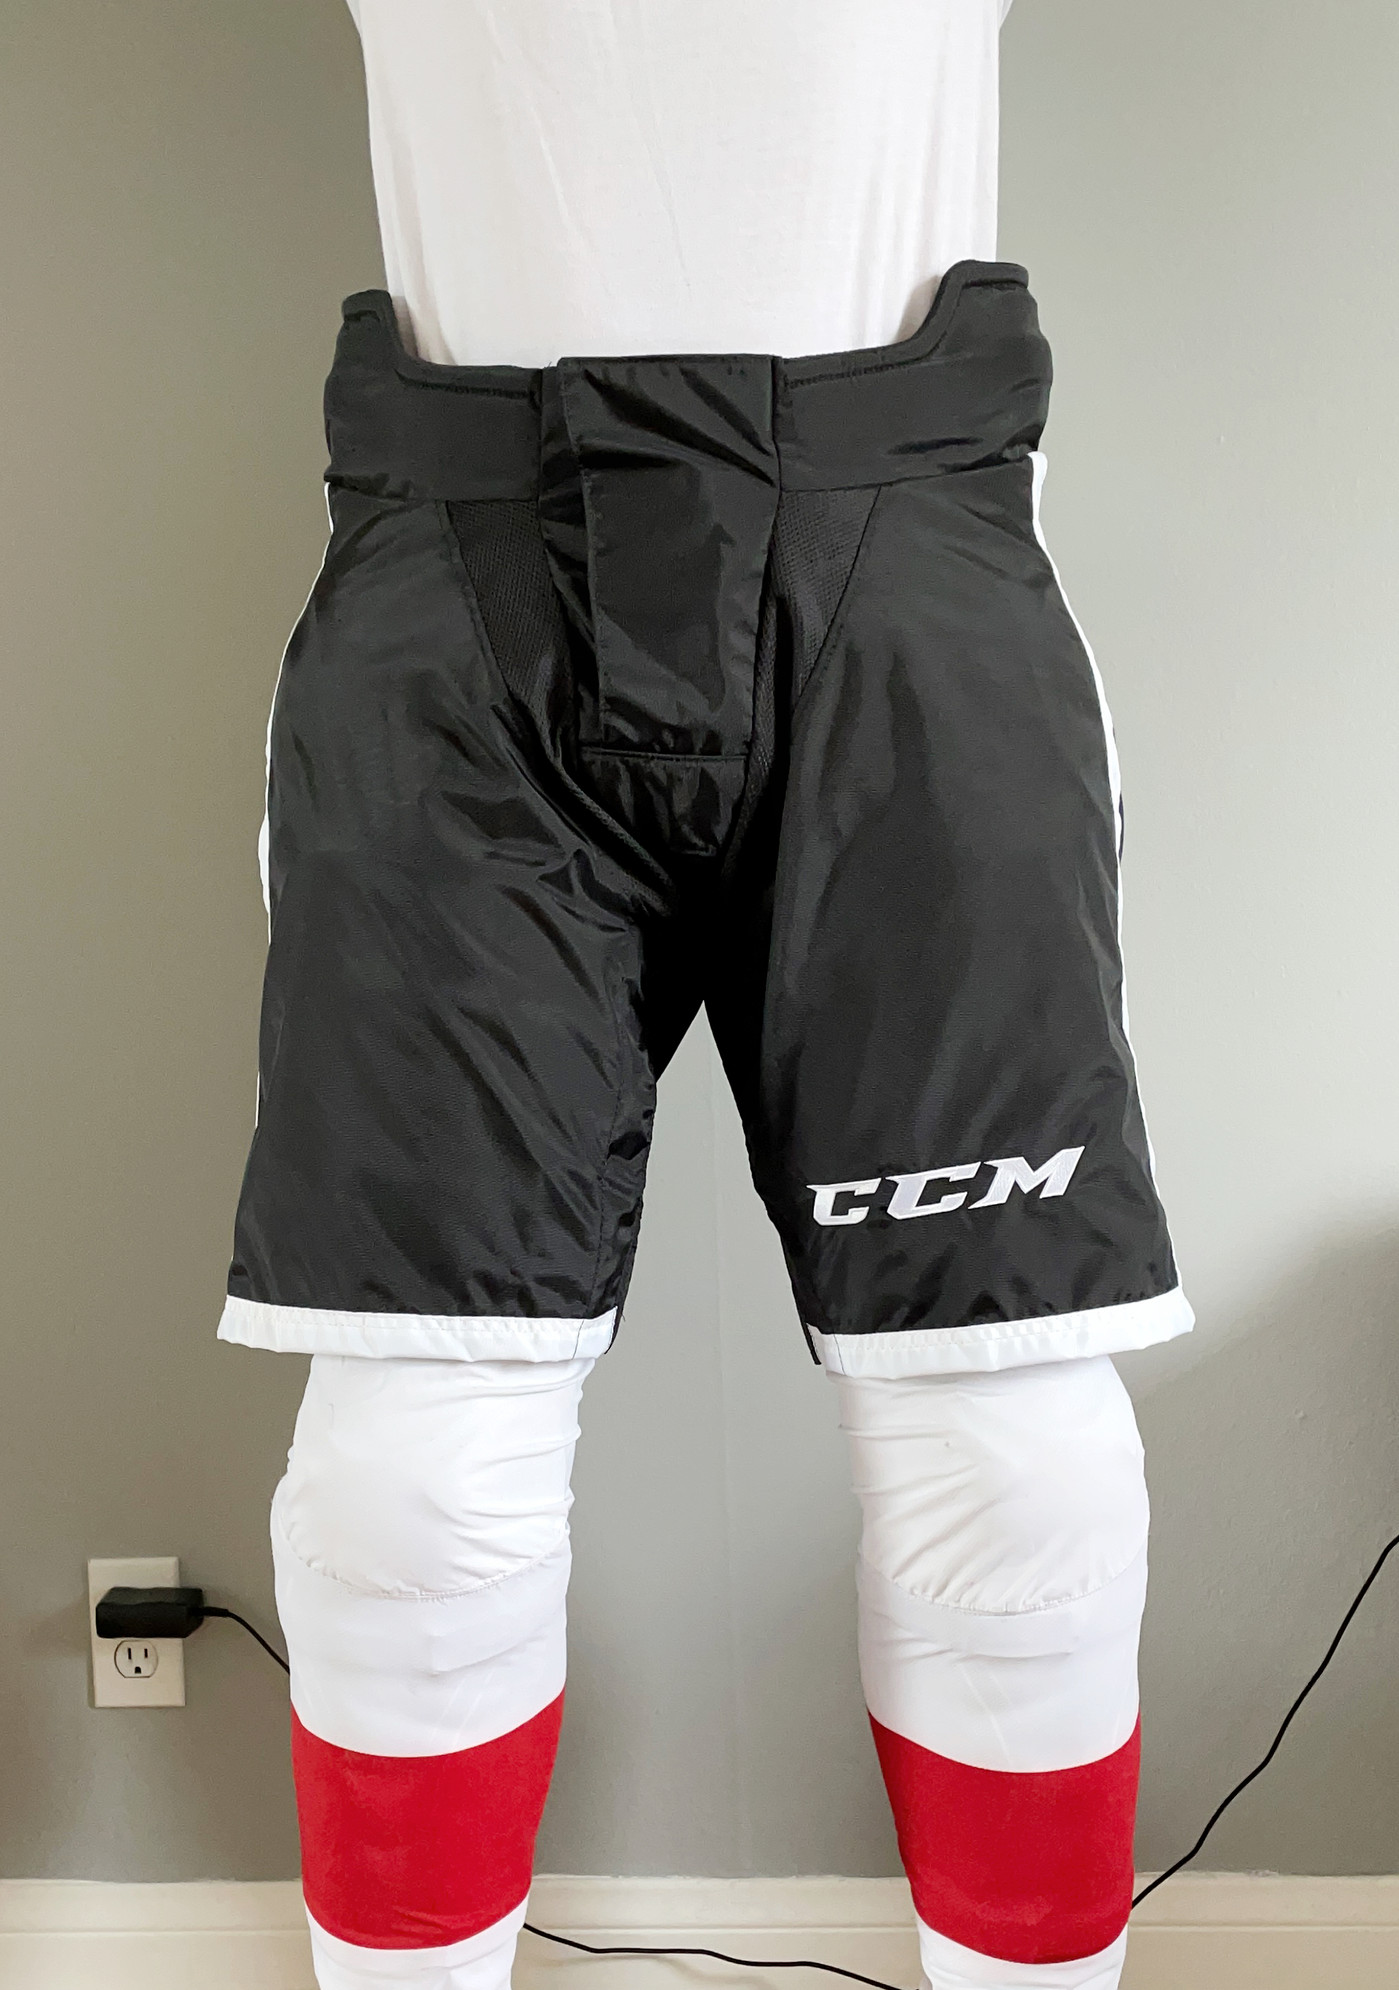 Super Tacks pants - MSH Long-Term Reviews - ModSquadHockey